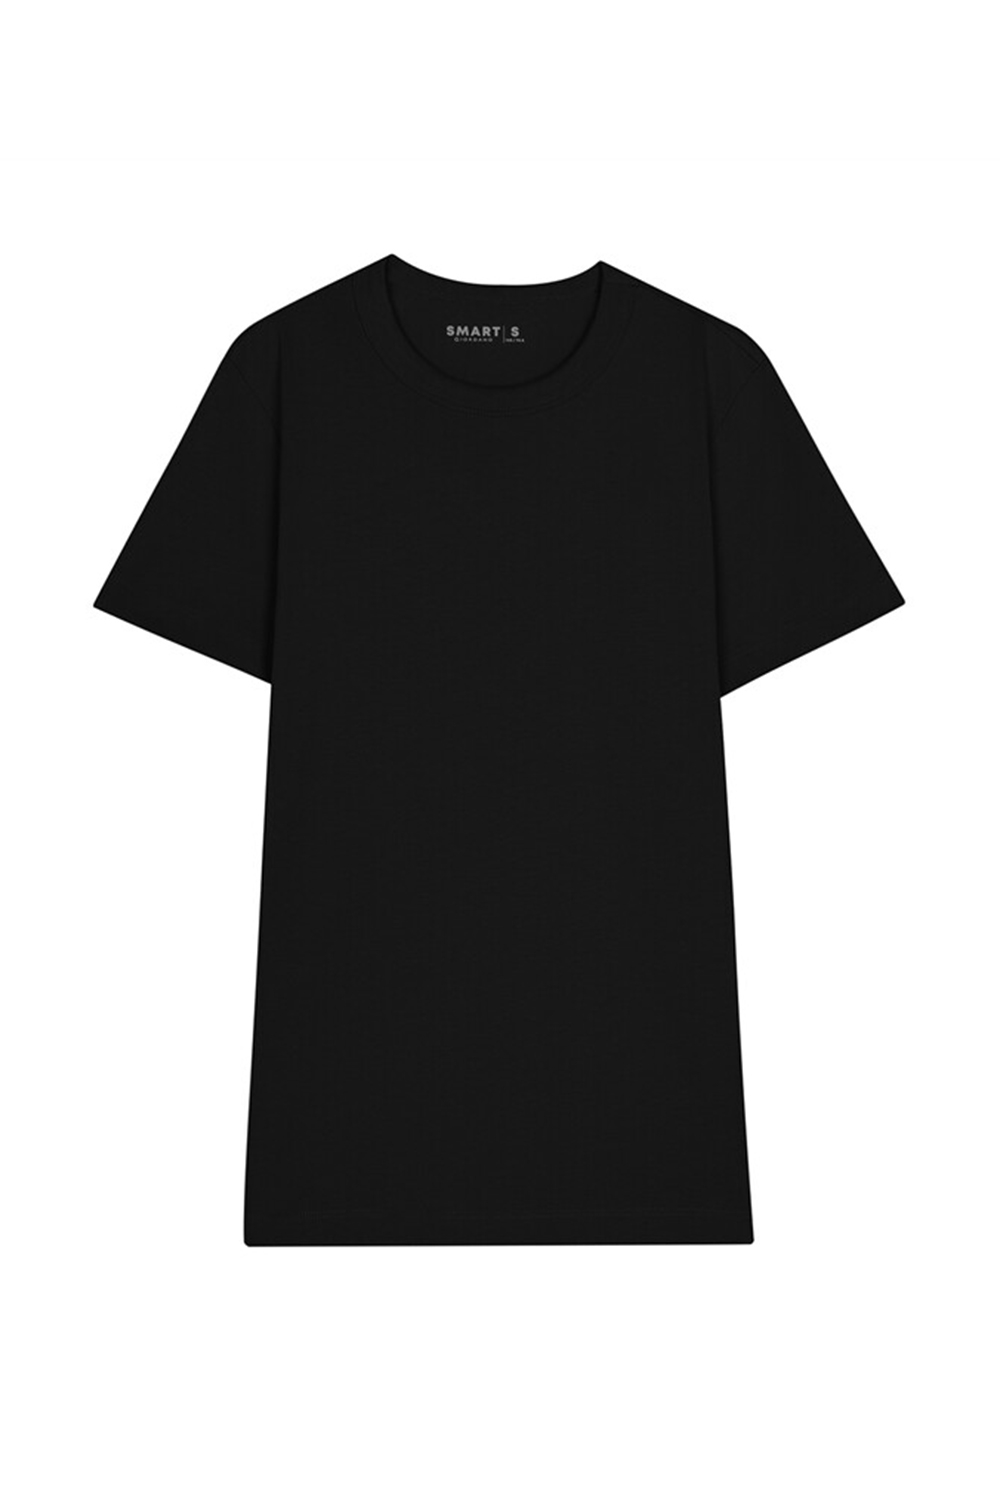 Giordano Womens Cotton Crew Neck Black Tshirt | Odel.lk